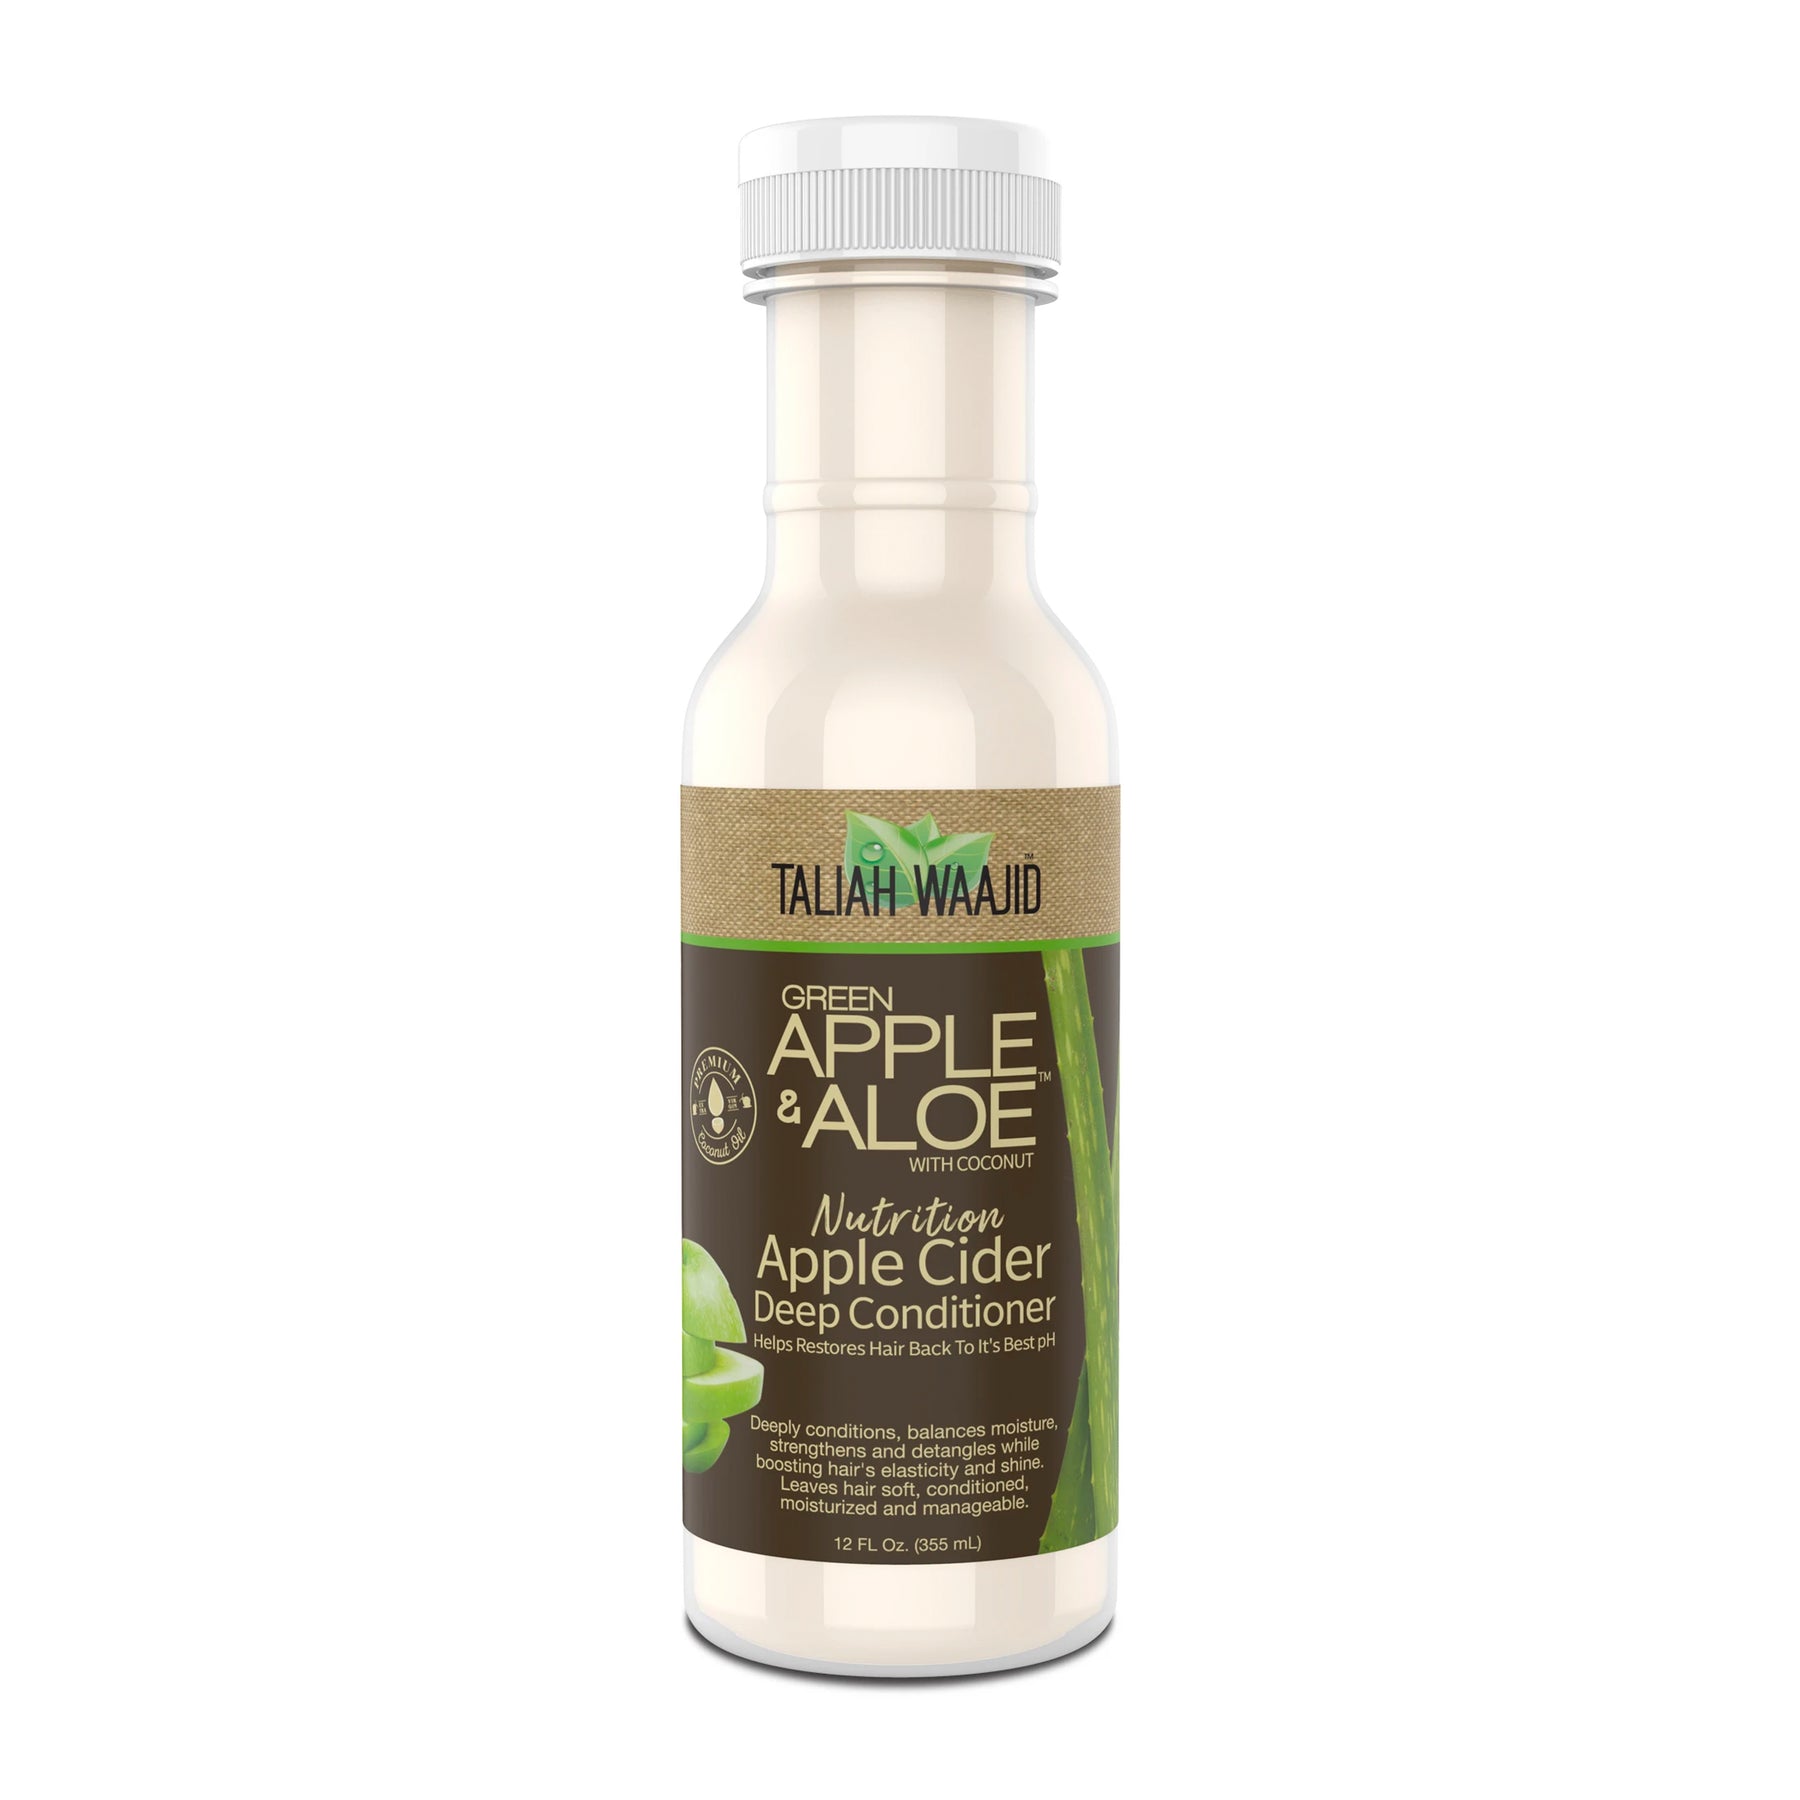 Taliah Waajid  Green Apple & Aloe Nutrition Apple Cider Deep Conditioner 12 oz- AQ Online